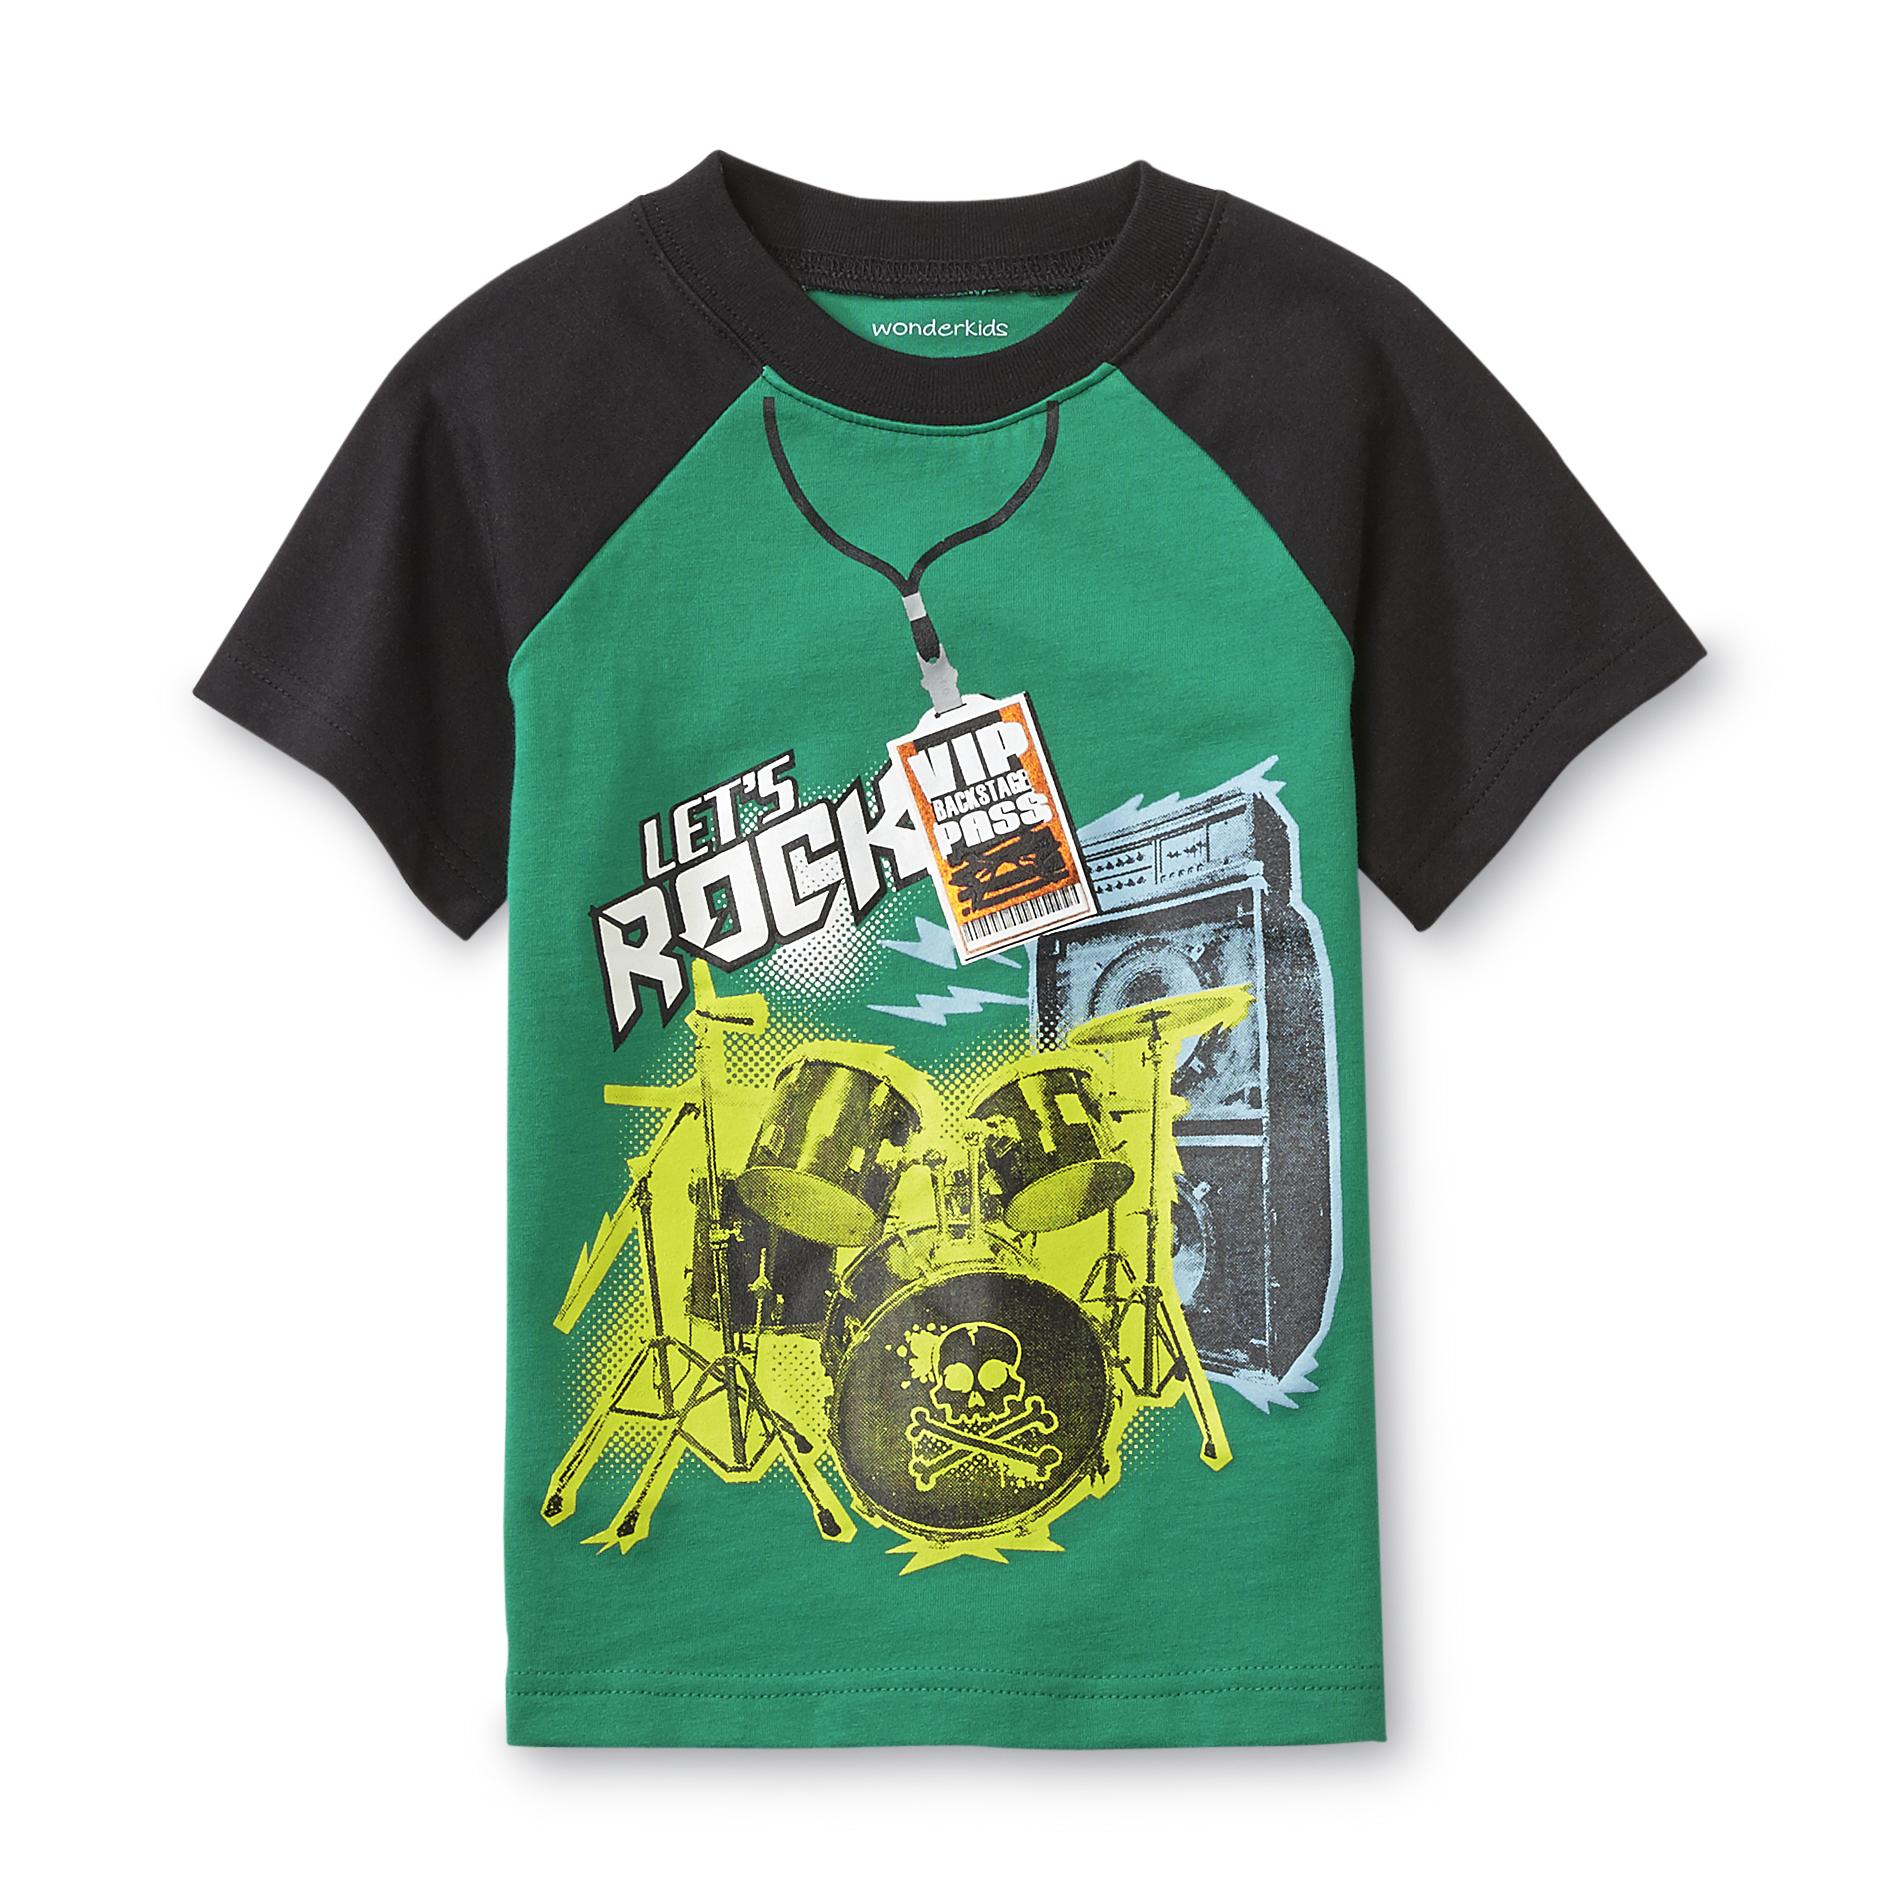 WonderKids Toddler Boy's Raglan Graphic T-Shirt - Drum Set